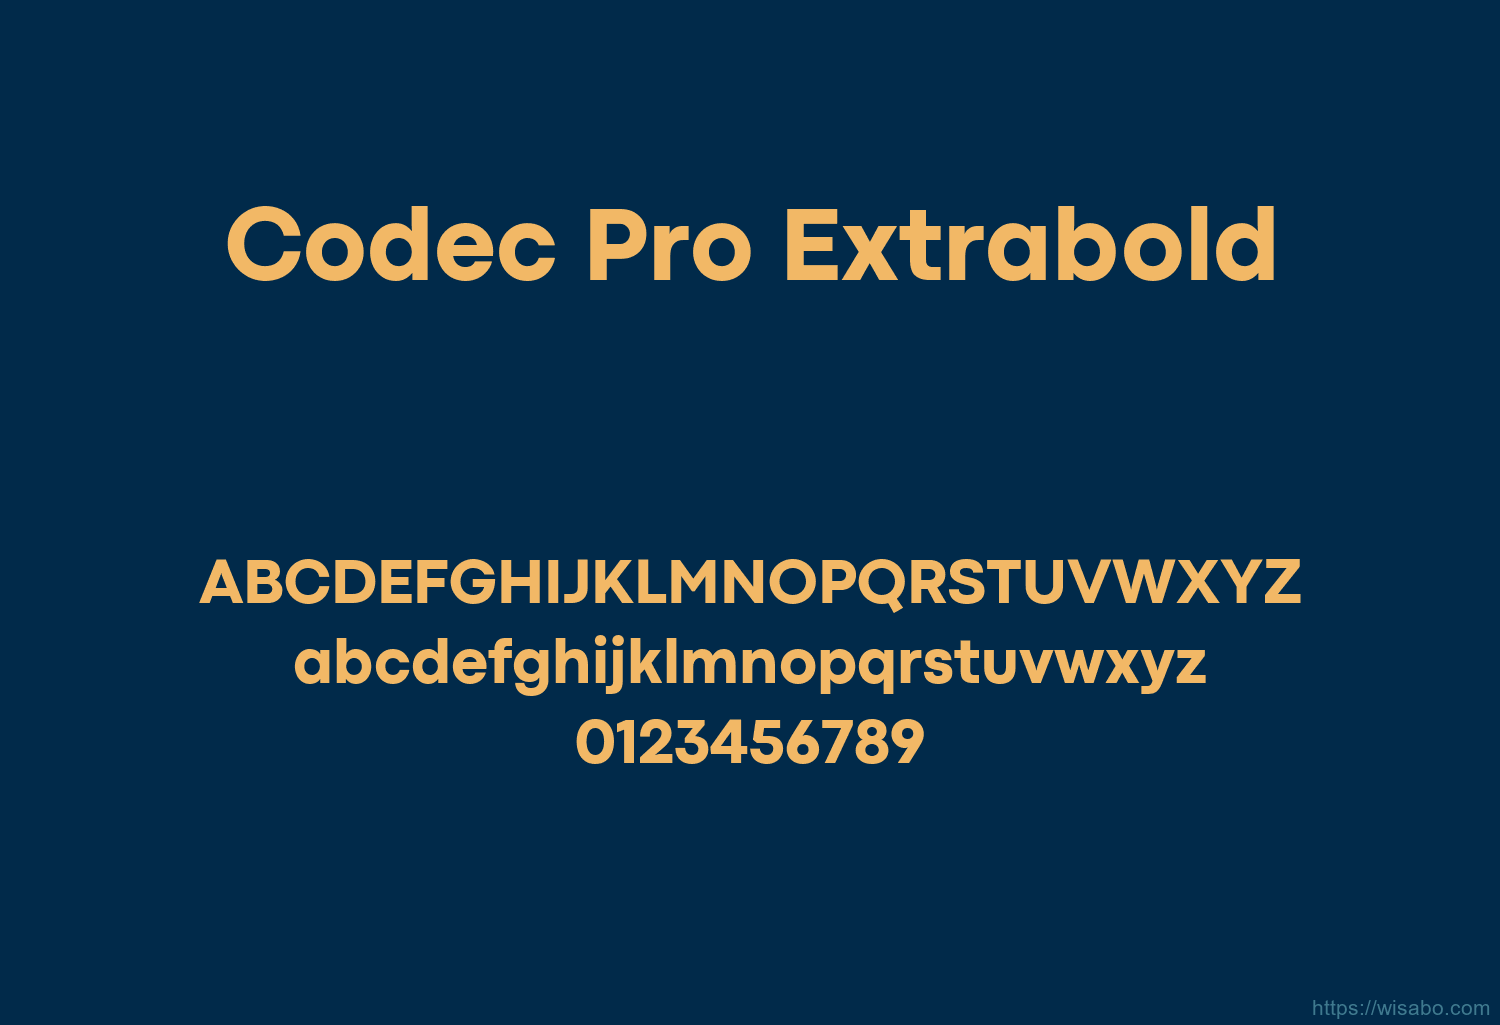 Codec Pro Extrabold